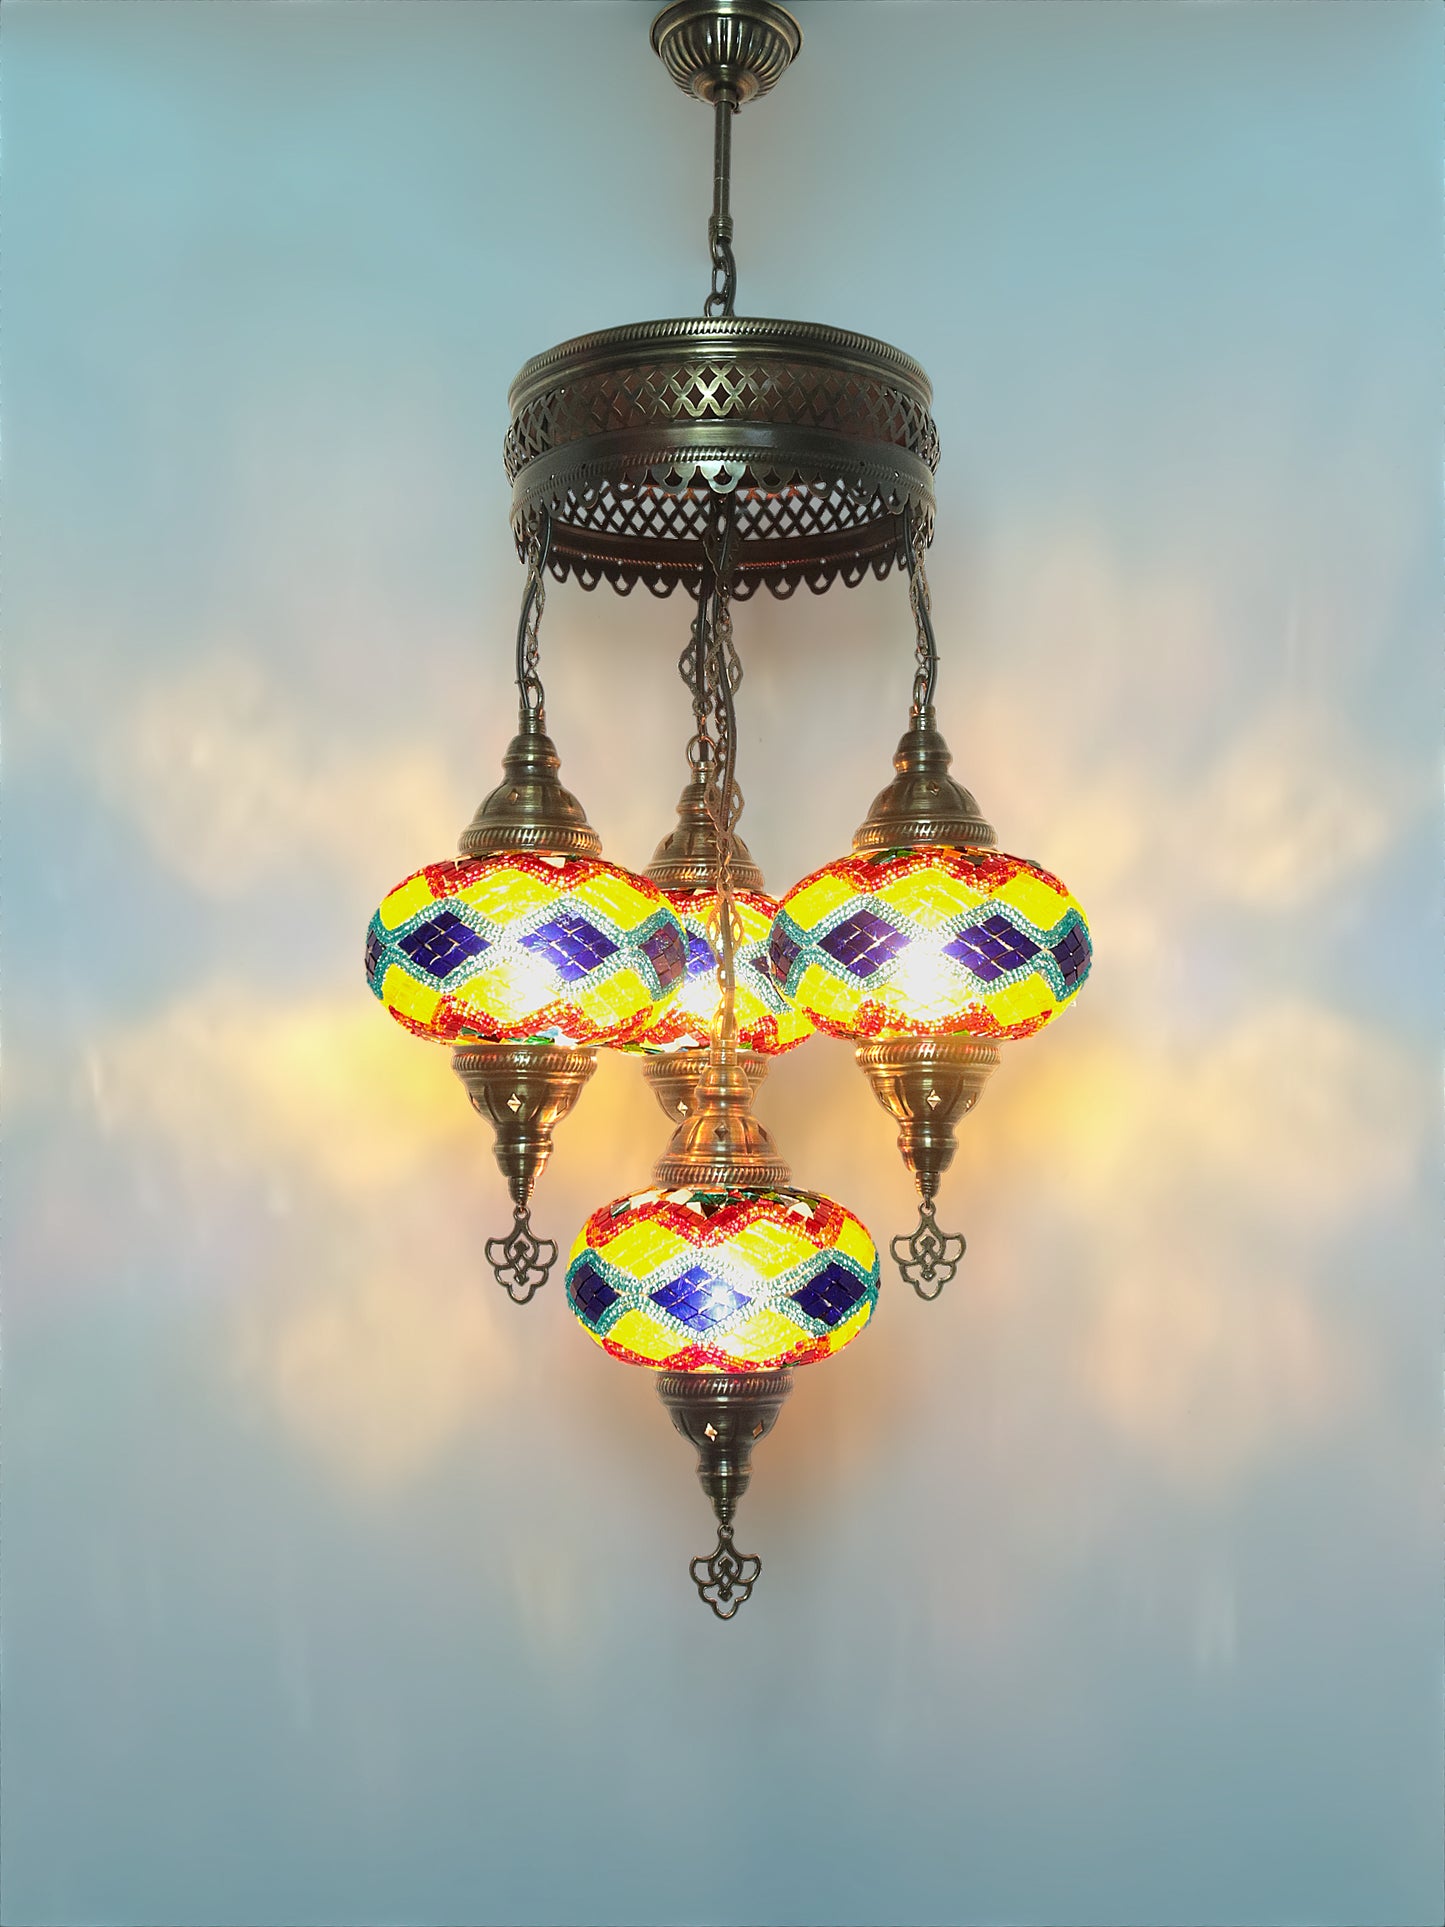 Turkish Mosaic Chandelier 4 Globe Dıfferent Color